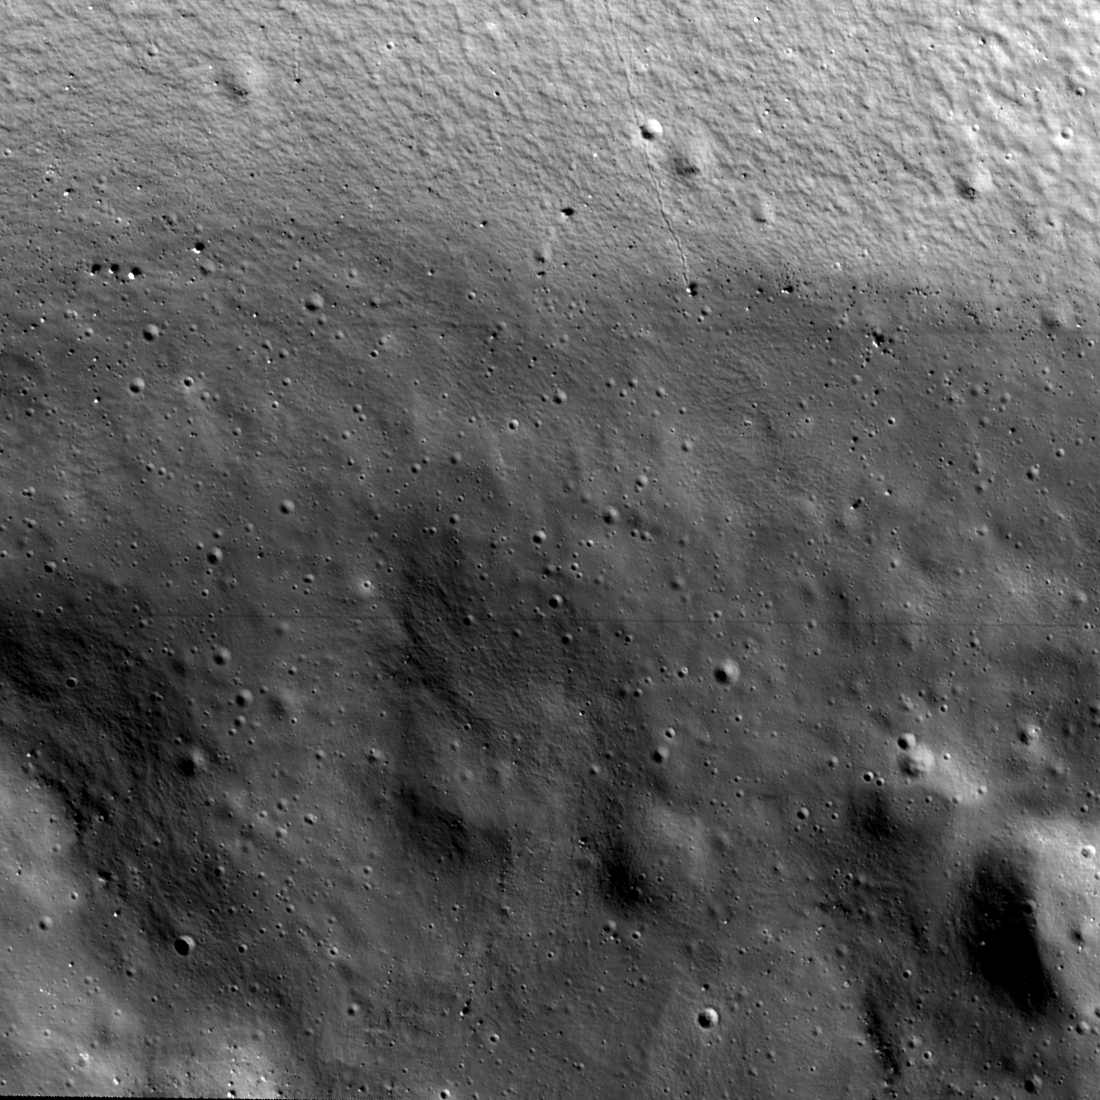 Shackleton crater floor seen at 1.85 m/pixel